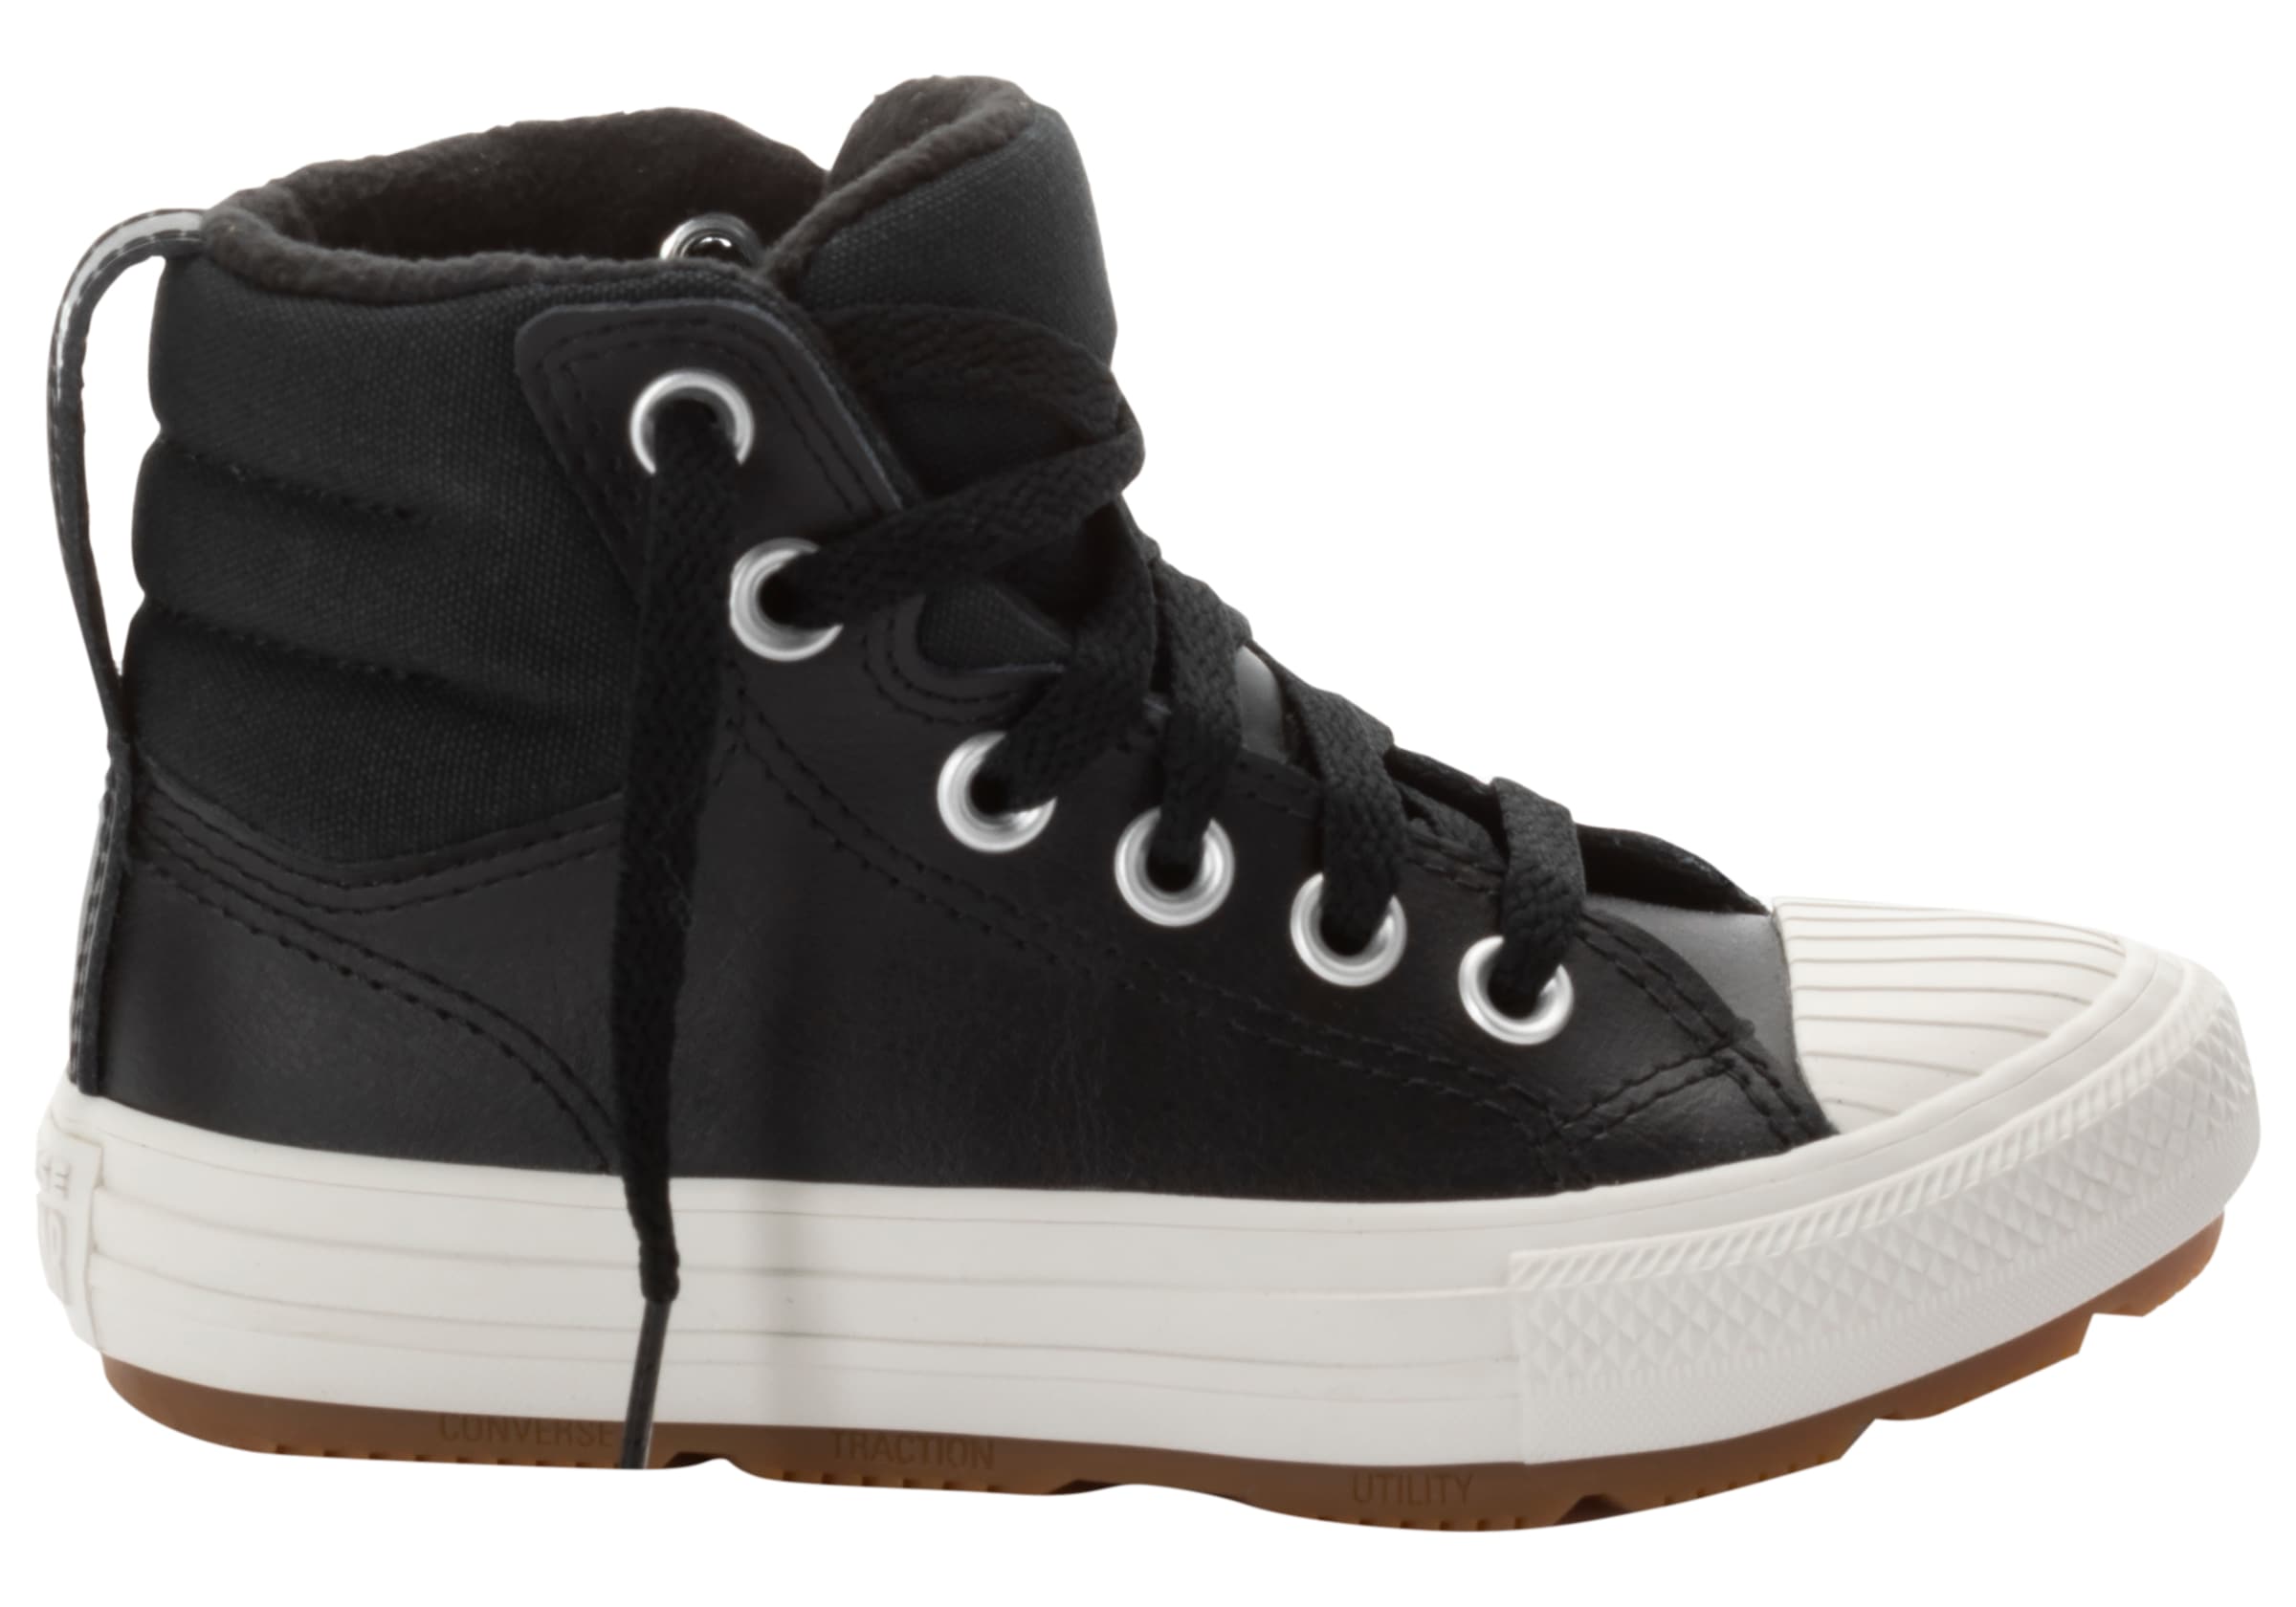 Converse Sneakerboots »CHUCK TAYLOR ALL STAR BERKSHIRE«, Warmfutter